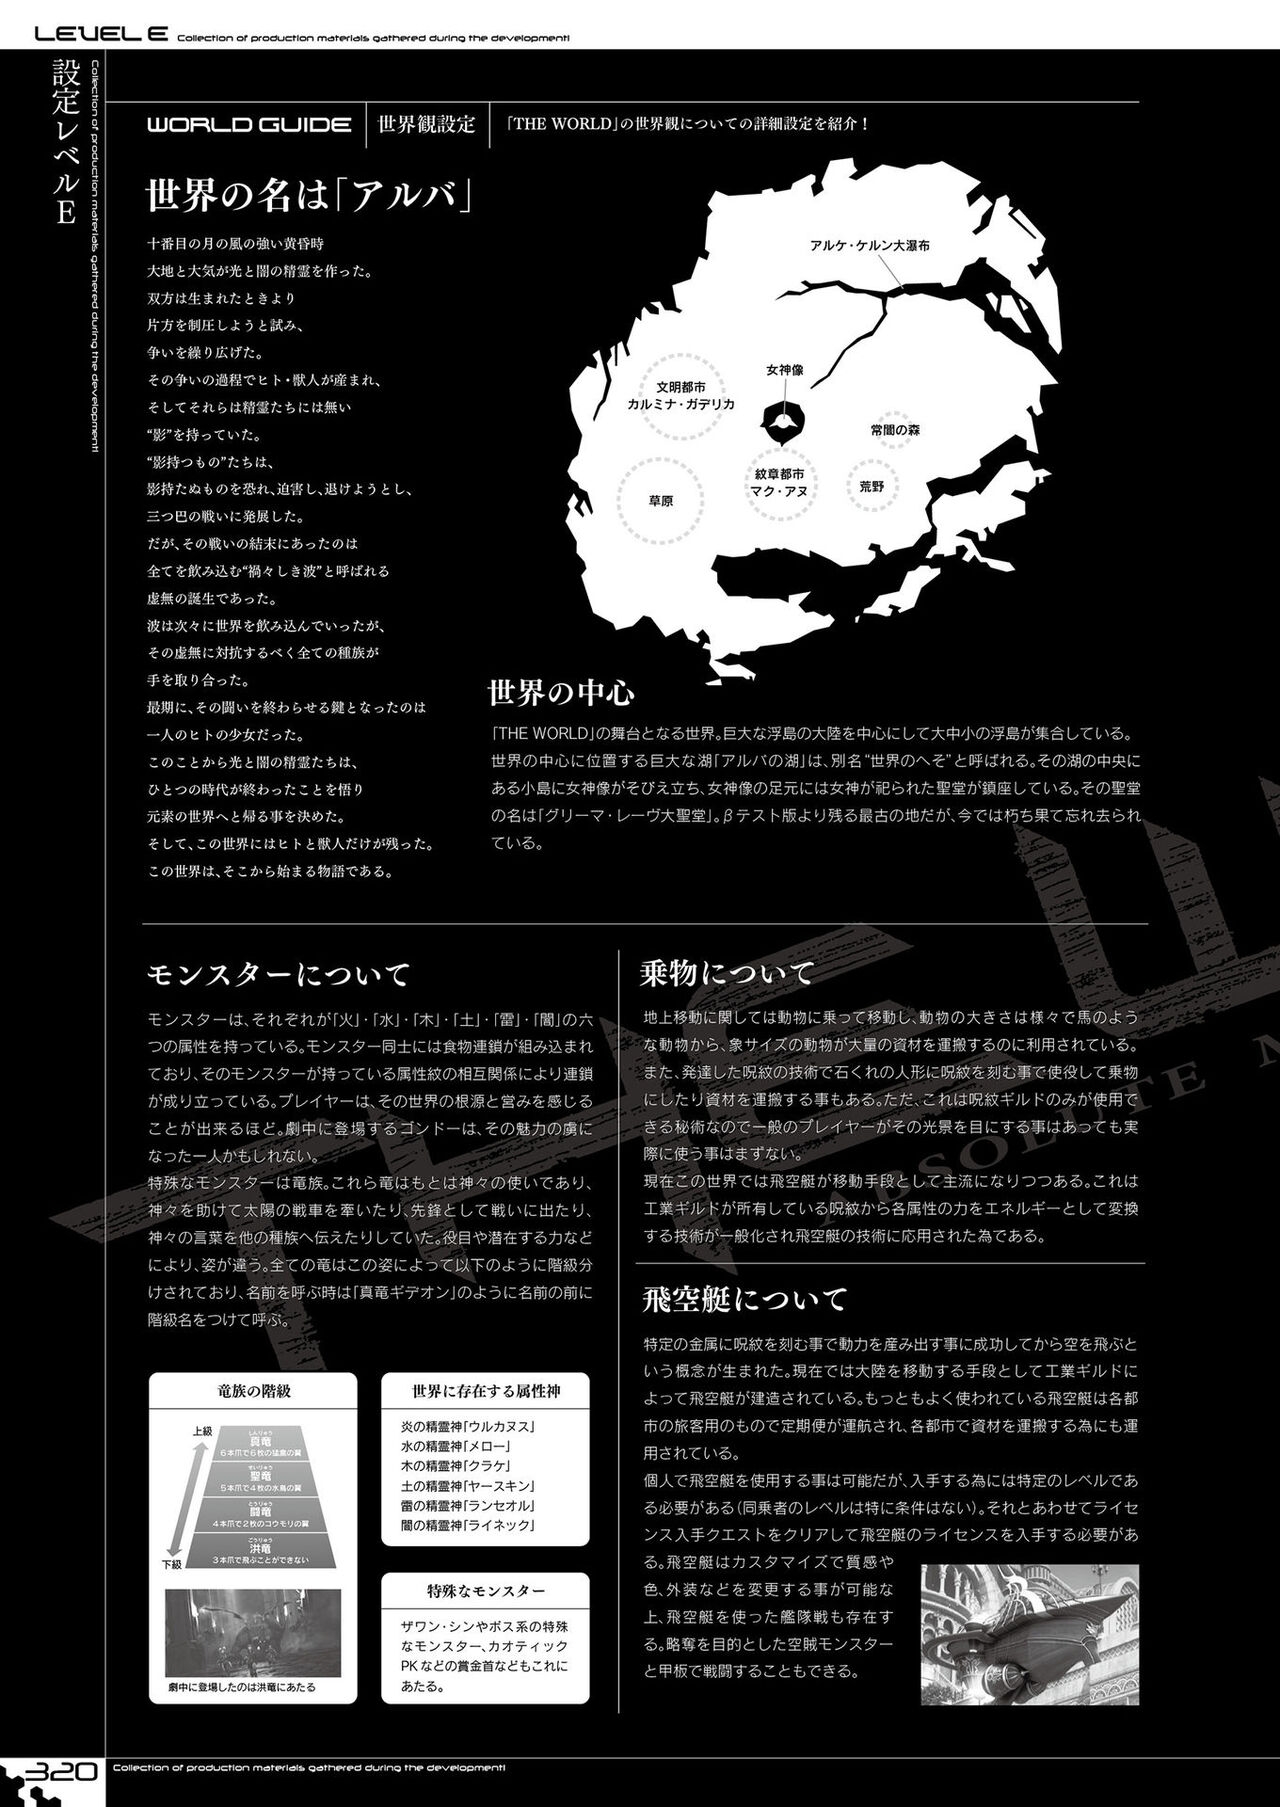 Dot Hack Sekai-no Muko ni  +Versus Complete Set  Documentation .hack //Archives _ 05 322